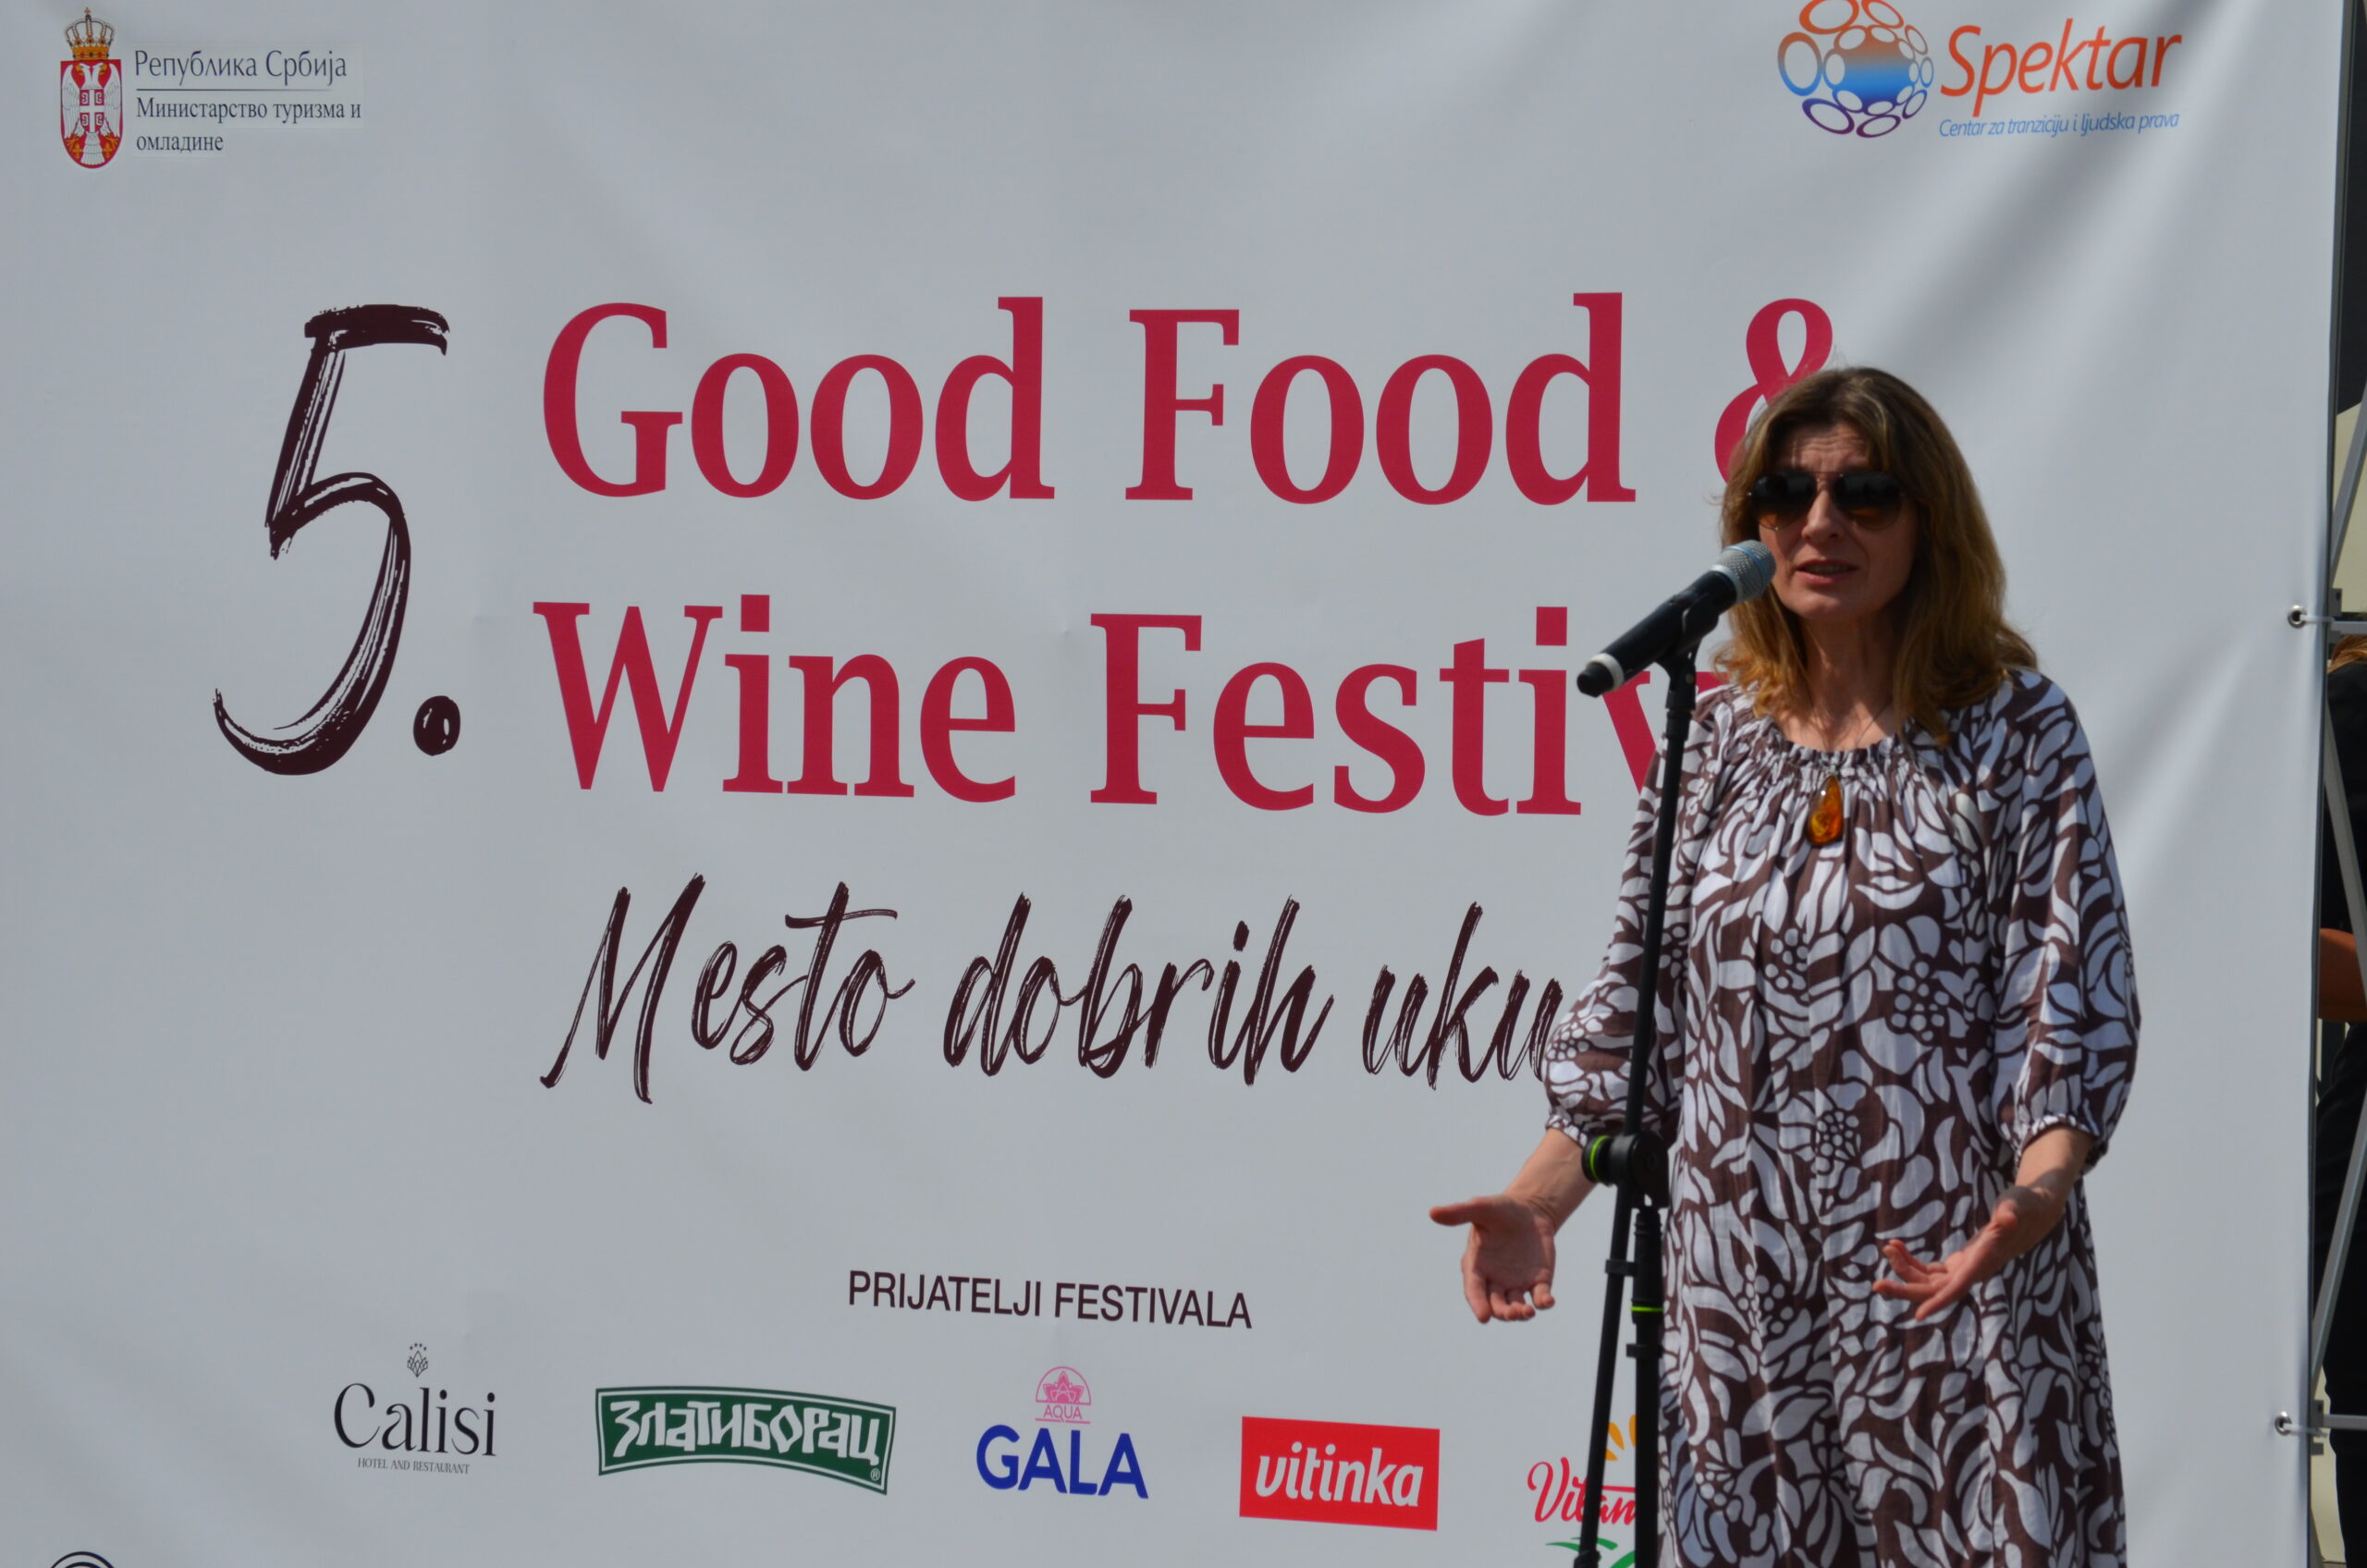 Održan peti Good Food & Wine Festival